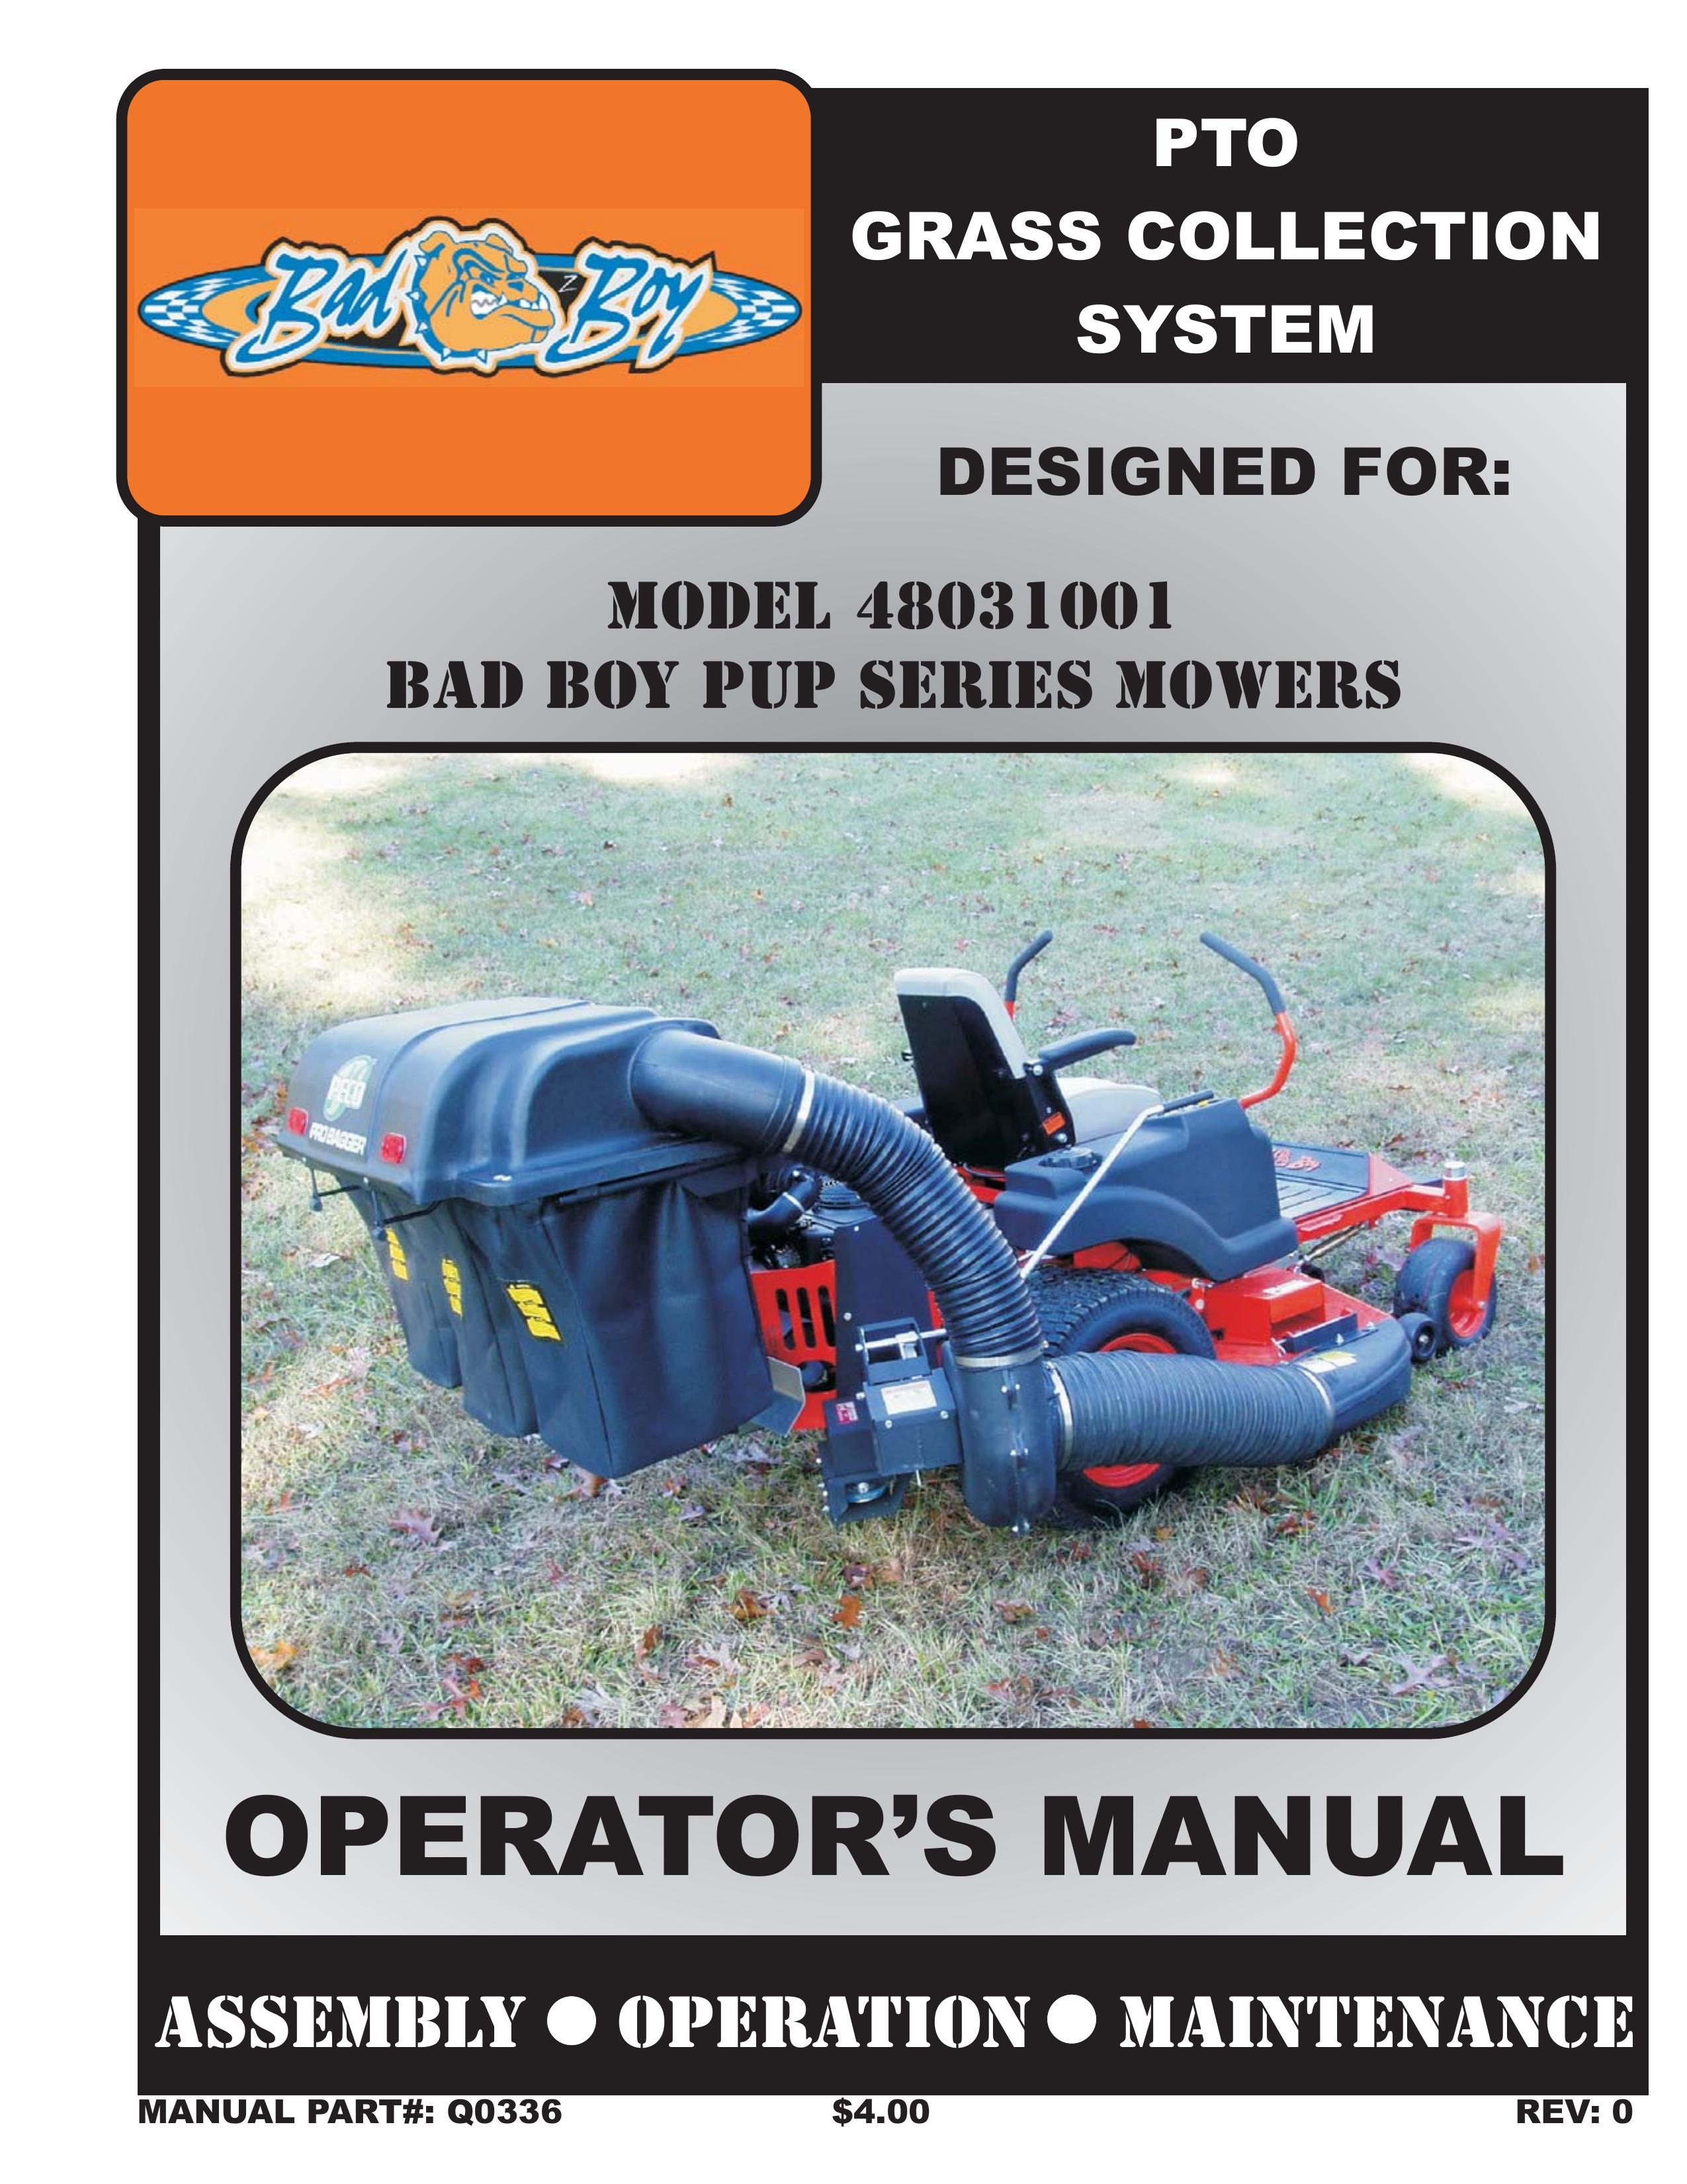 Bad Boy Mowers 48031001 Lawn Mower User Manual